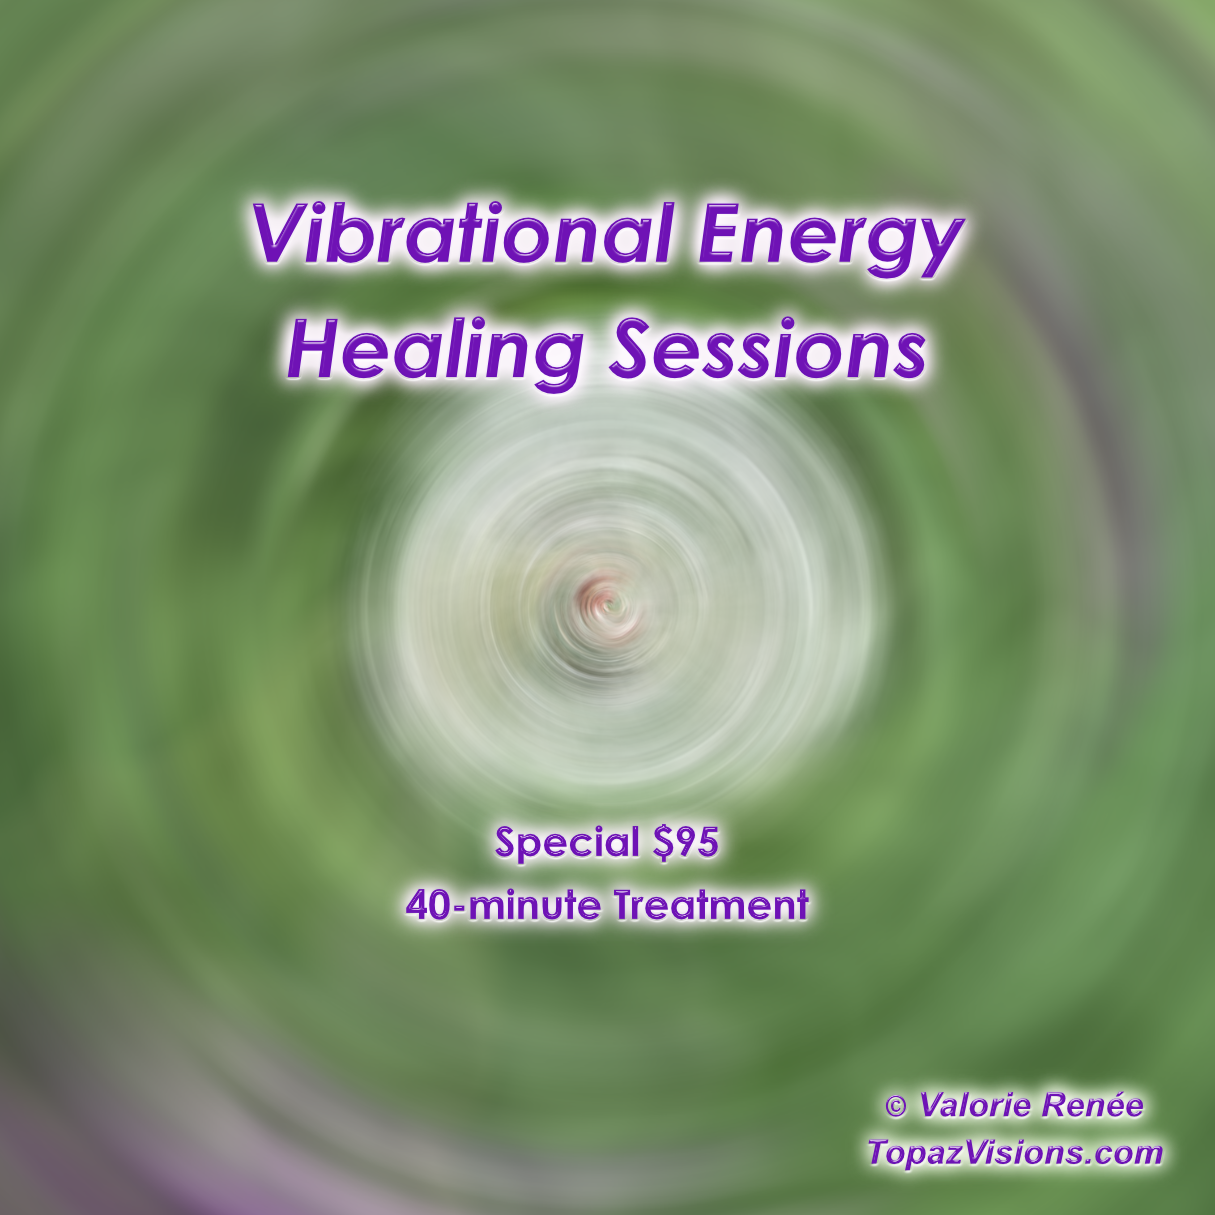 Vibrational Energy Healing Sessions